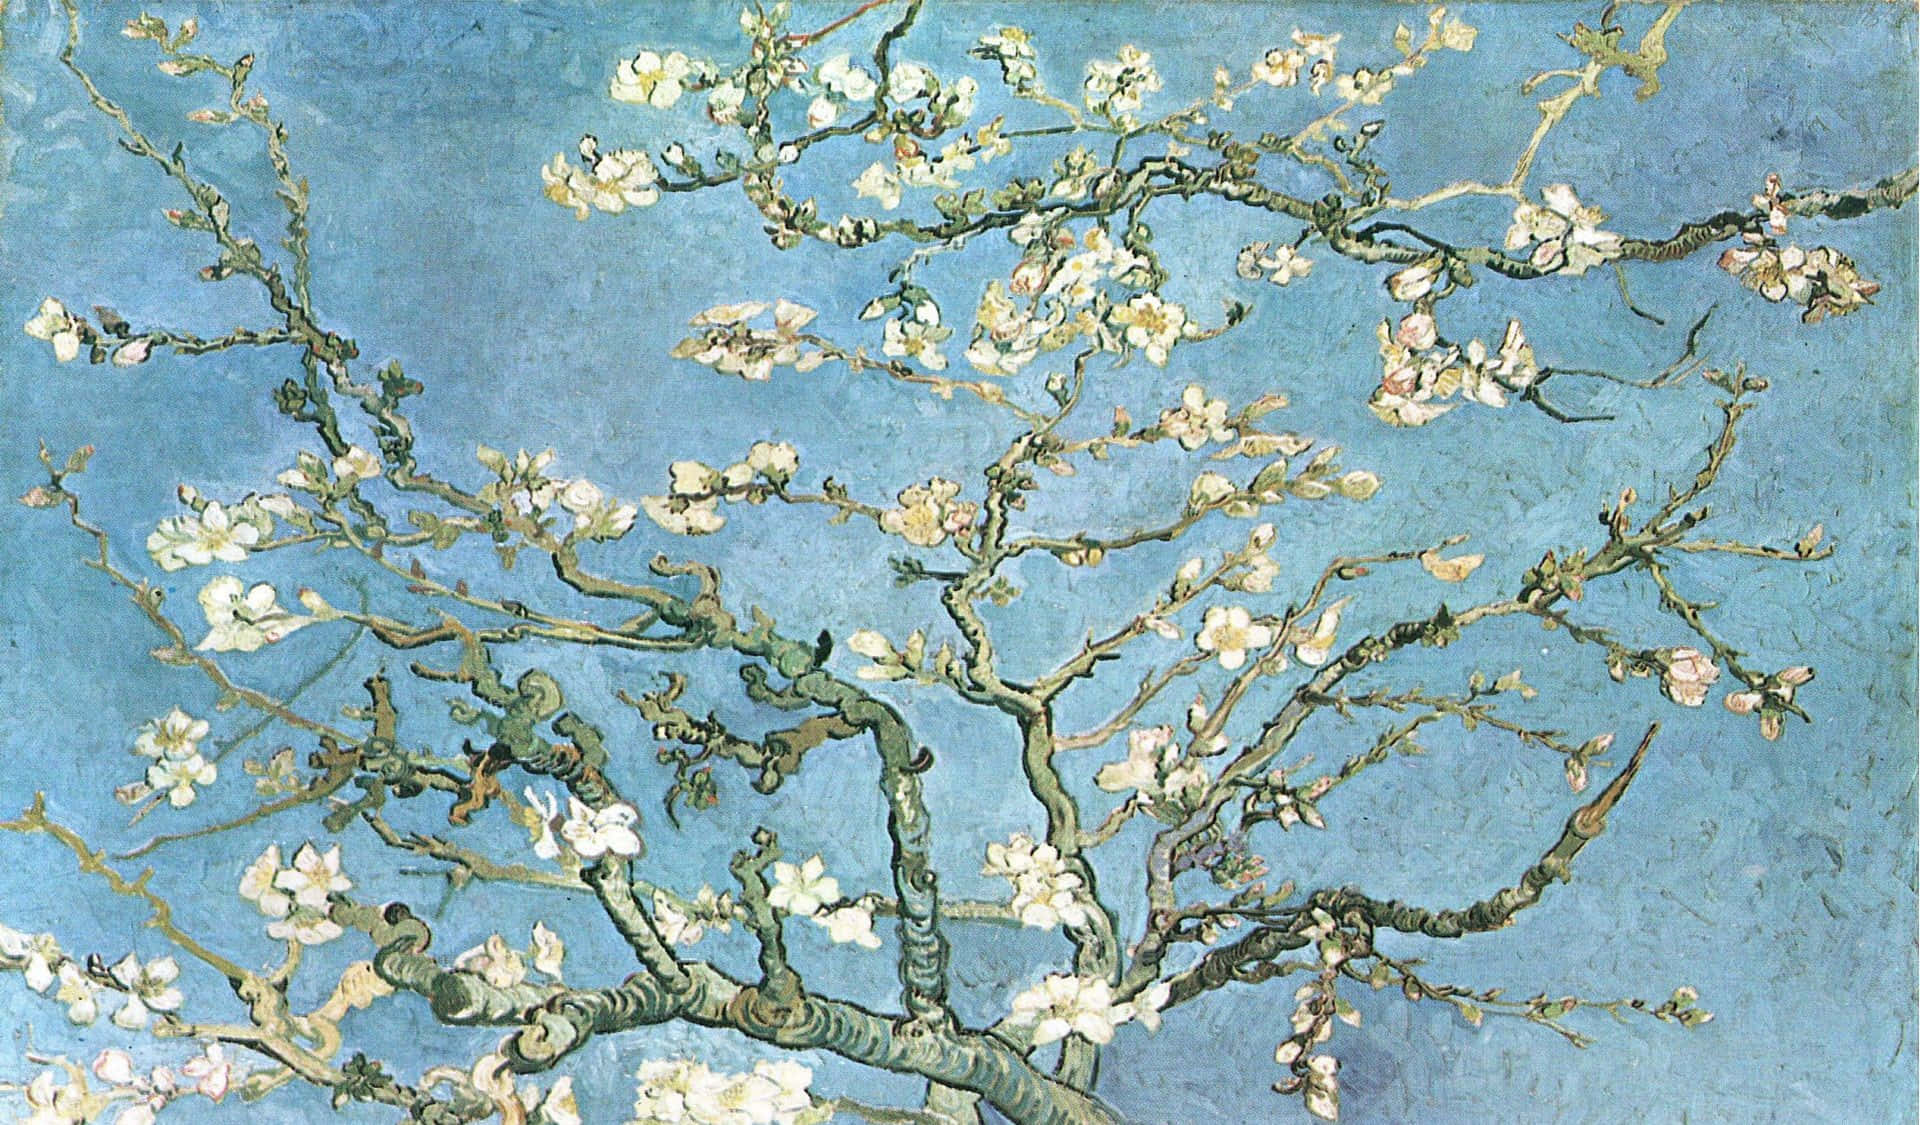 Vincentvan Goghs Ikoniske Maleri 